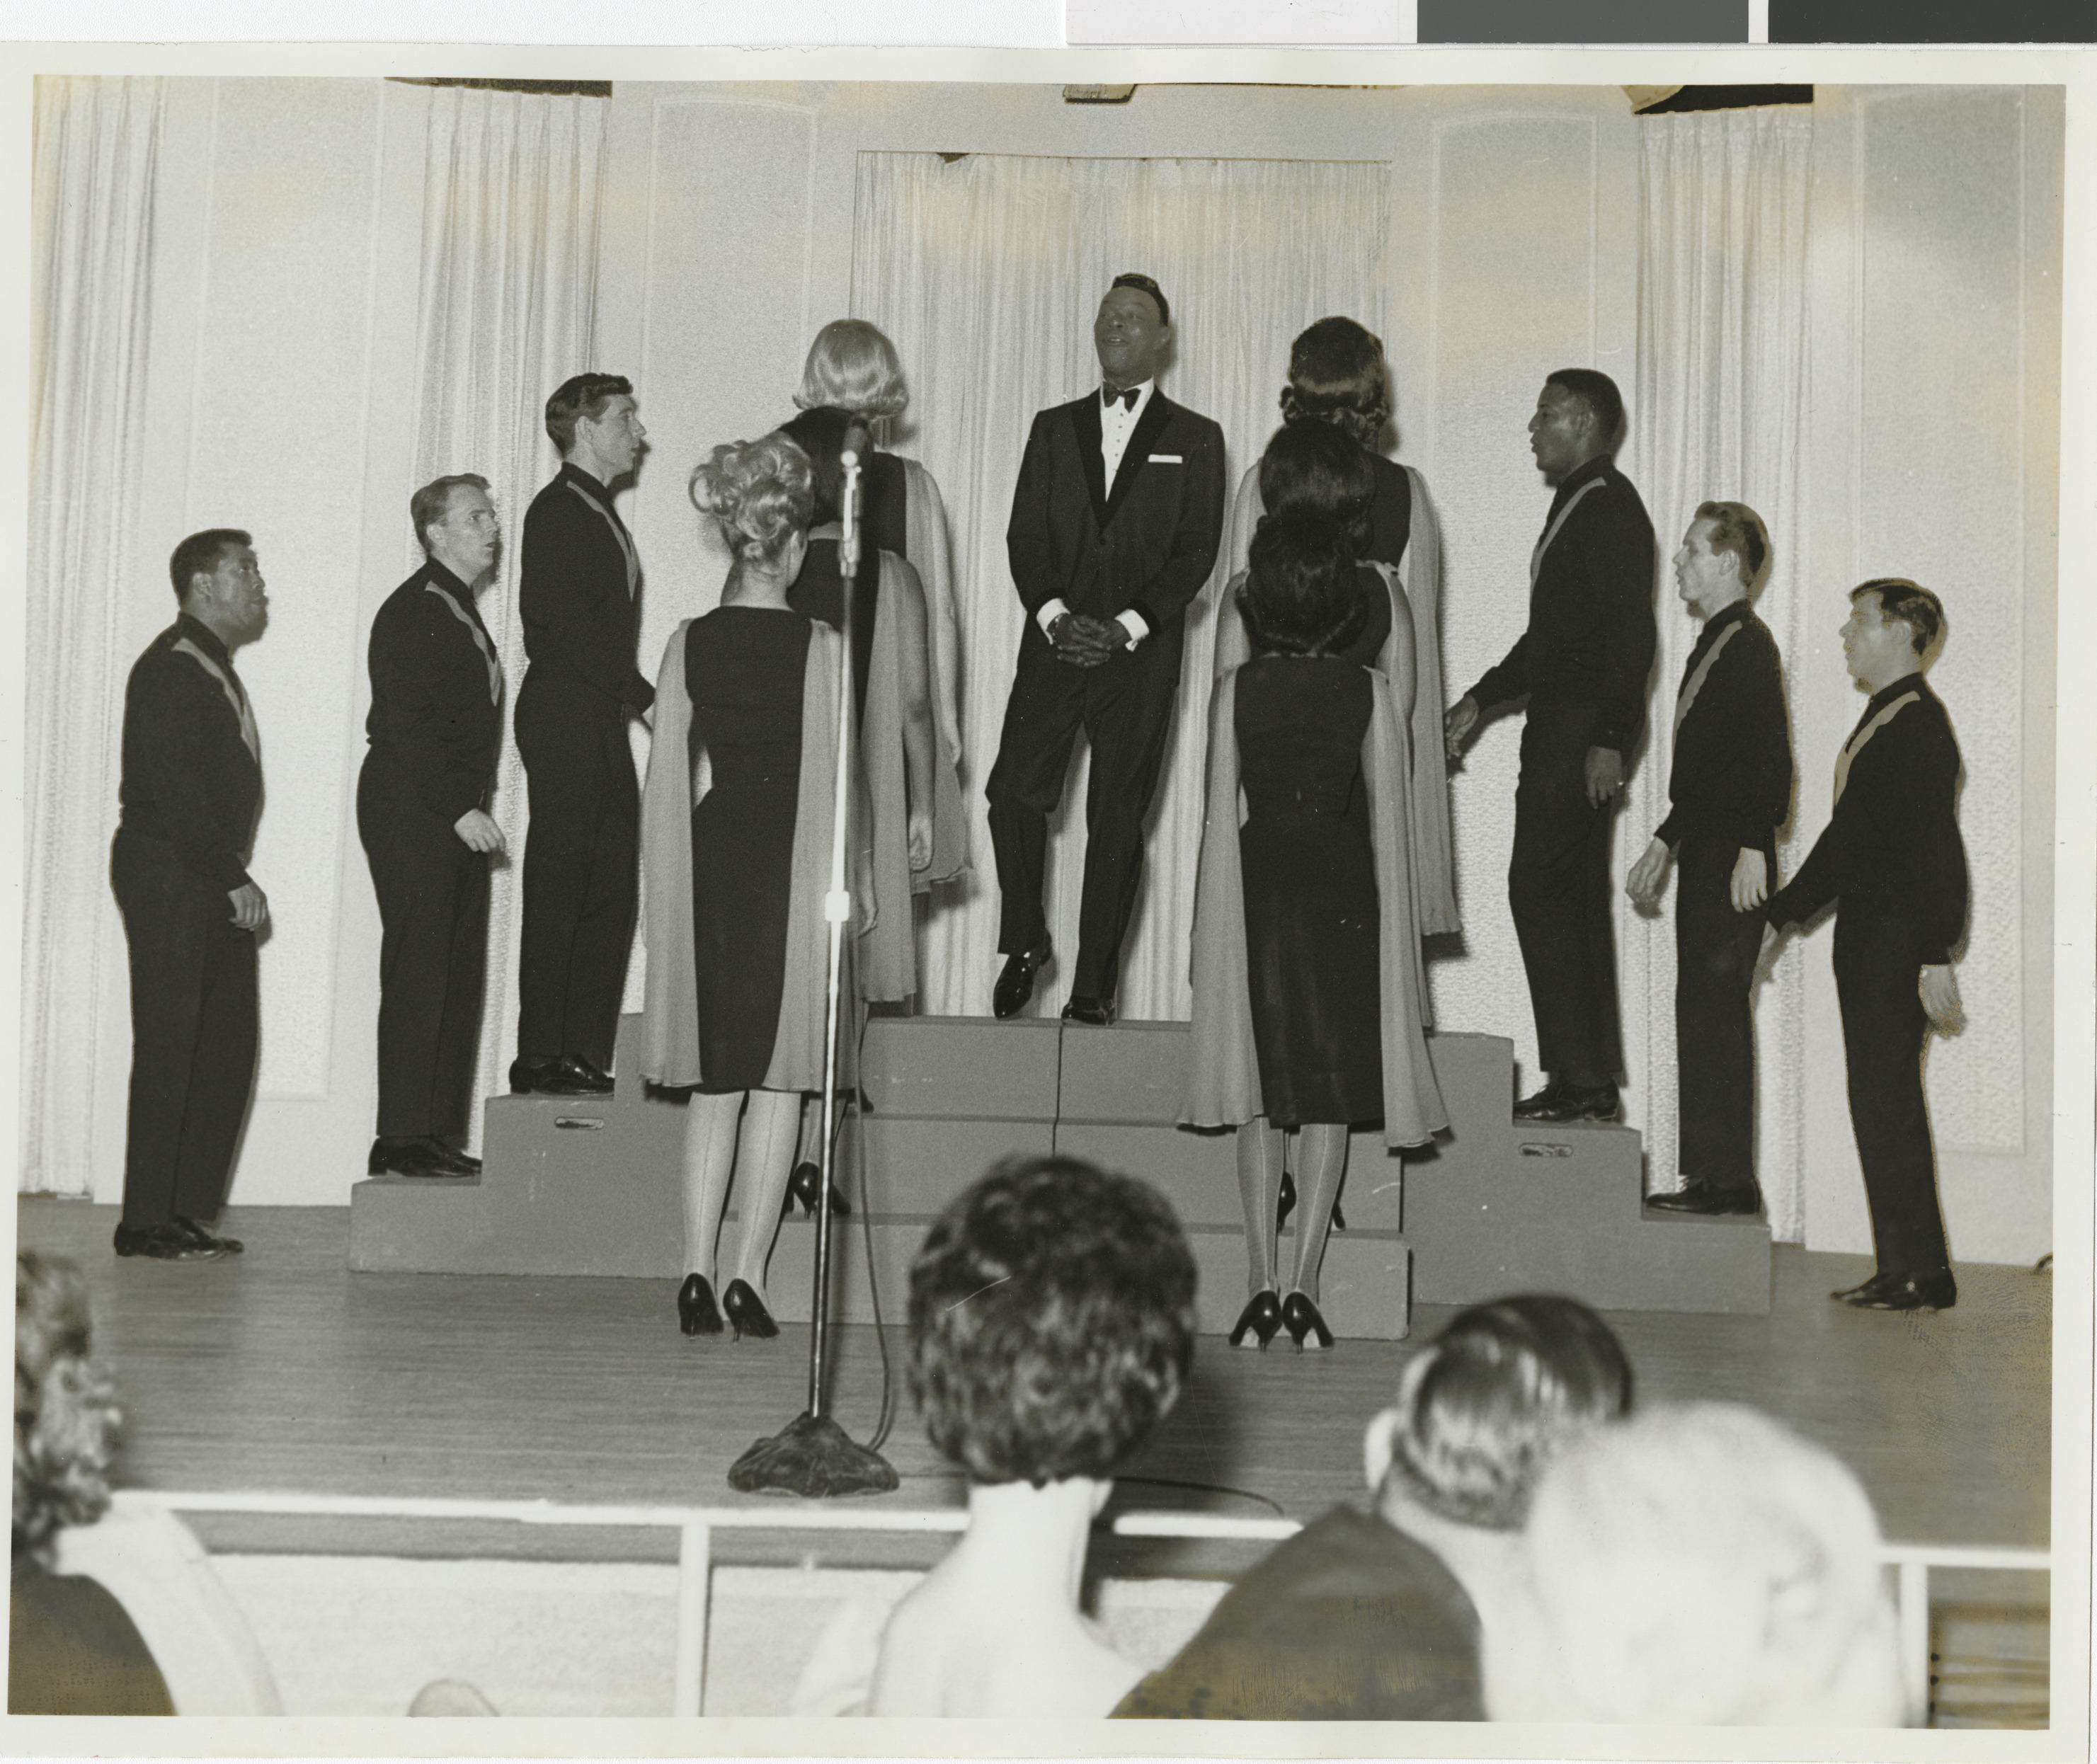 Nat King Cole on stage, Image 03